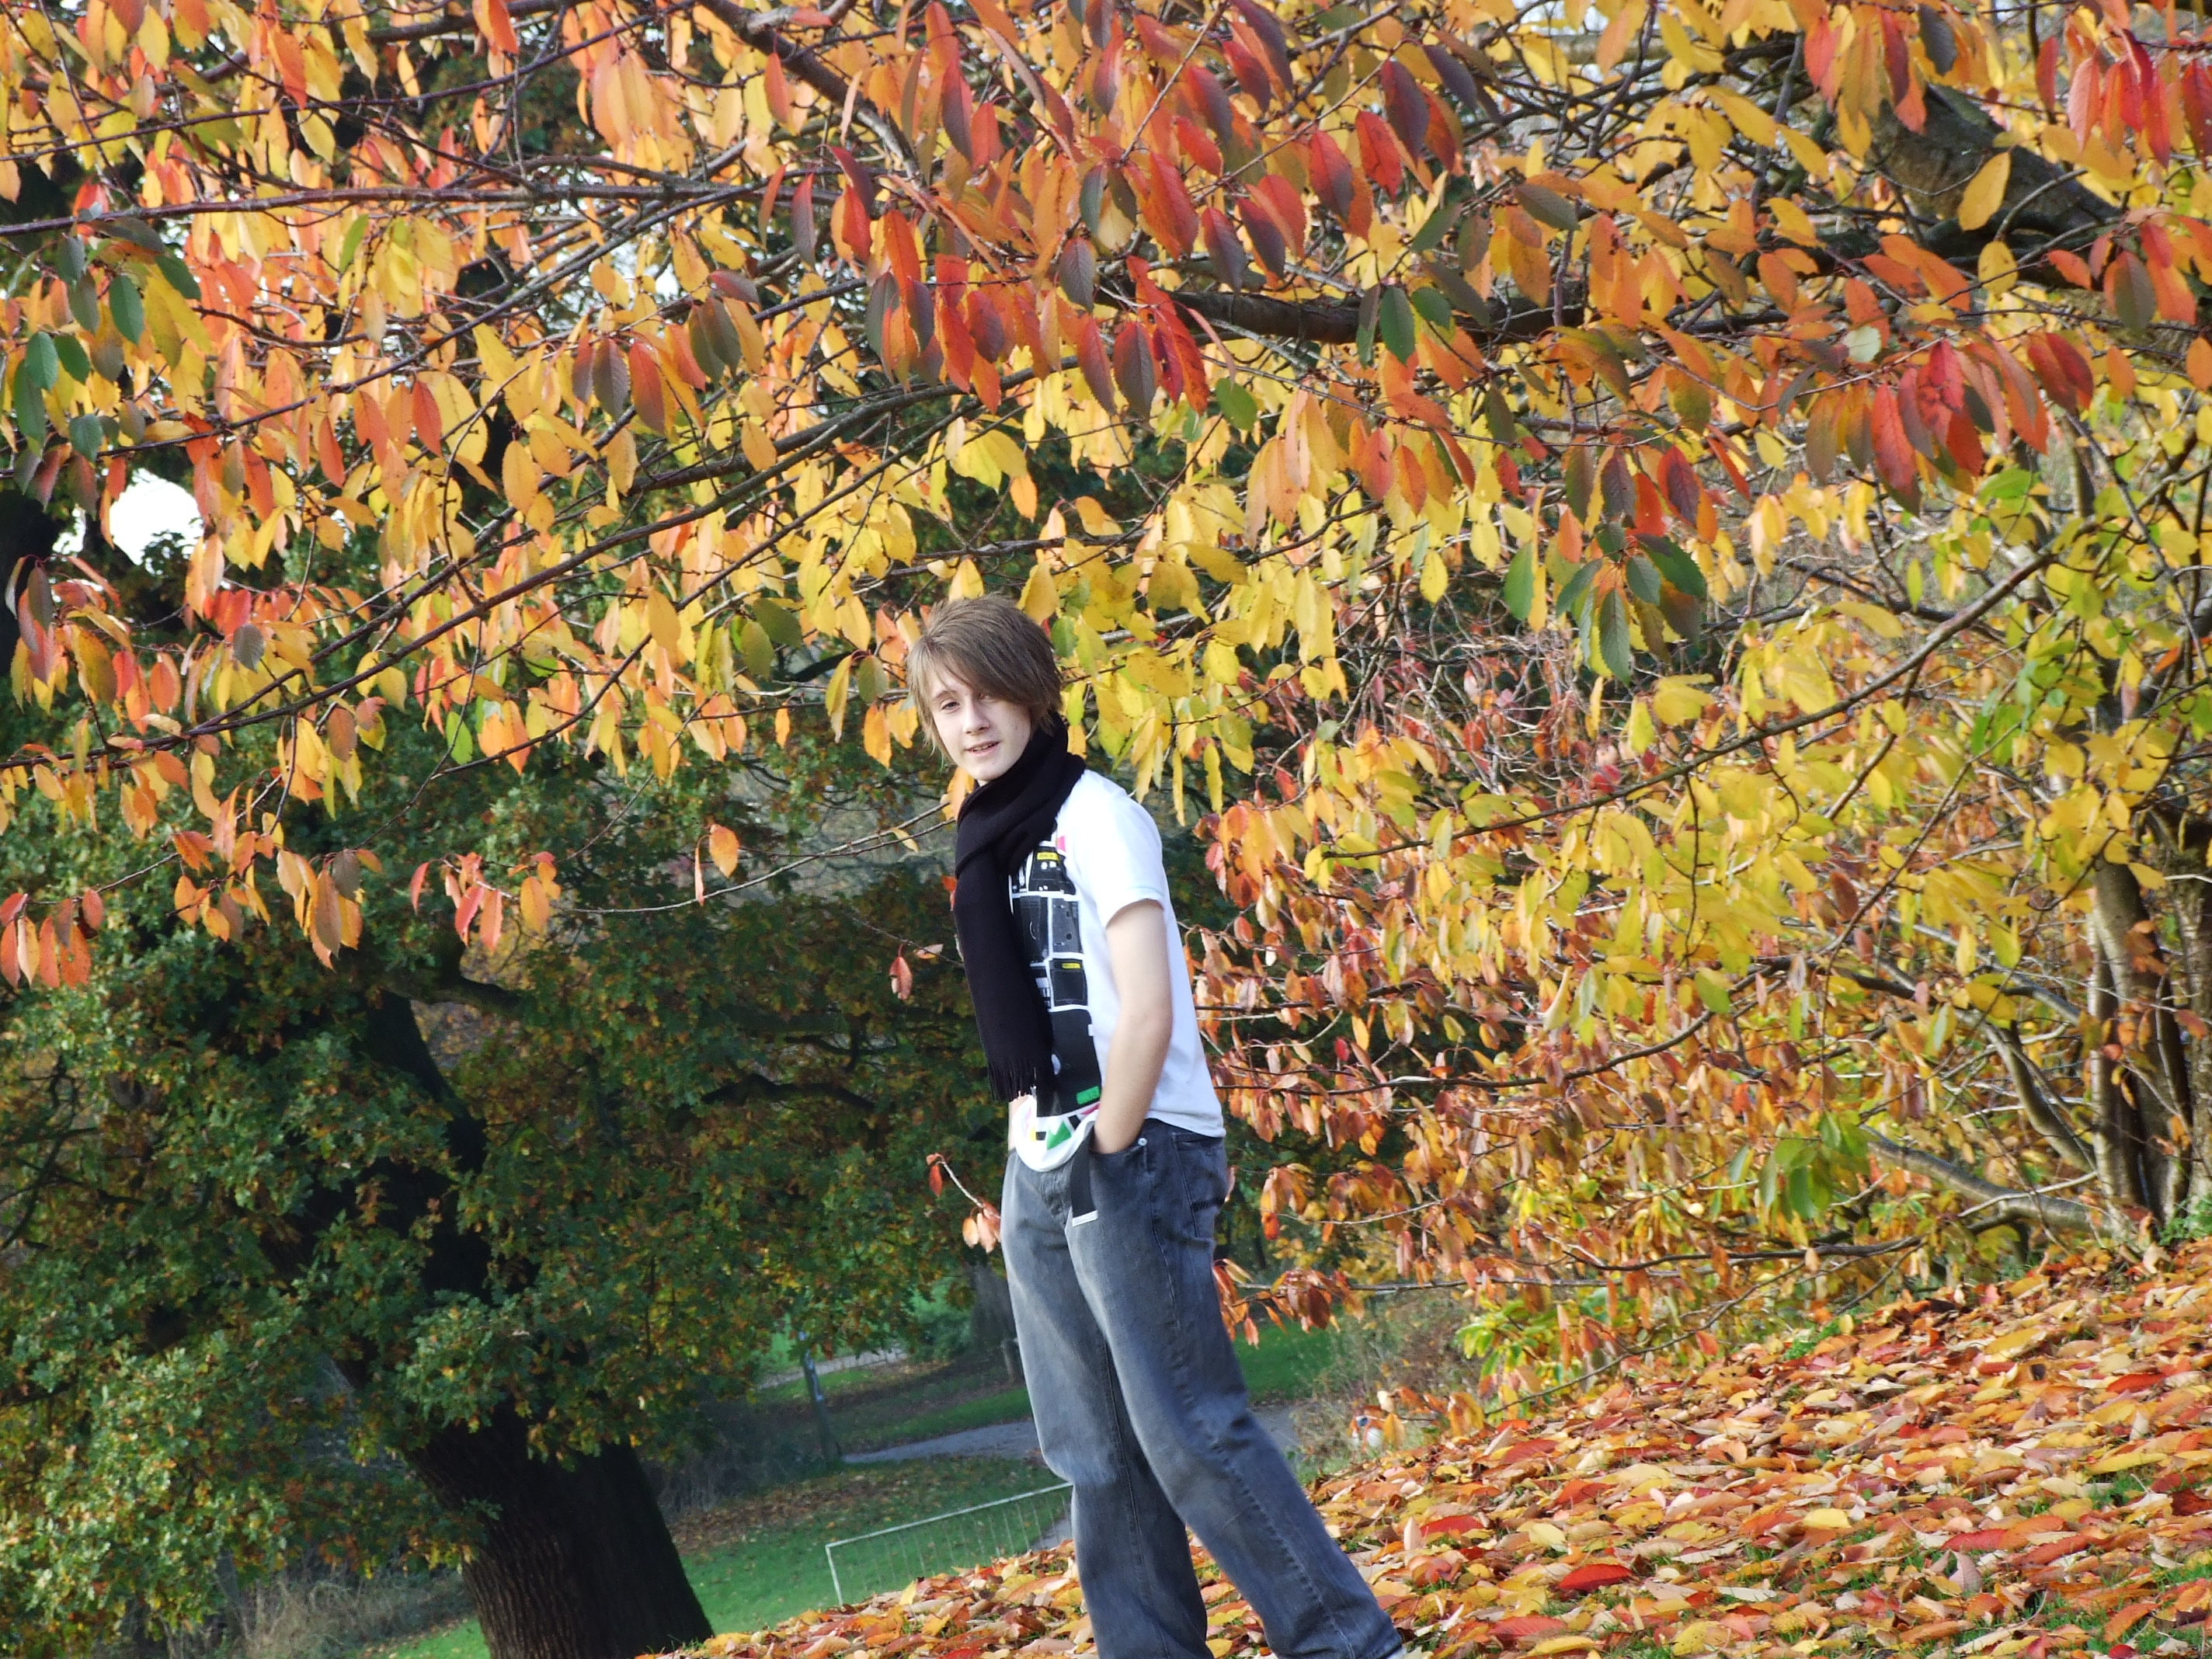 Autumn leaves, Autumn, Boy, Colors, Fall, HQ Photo